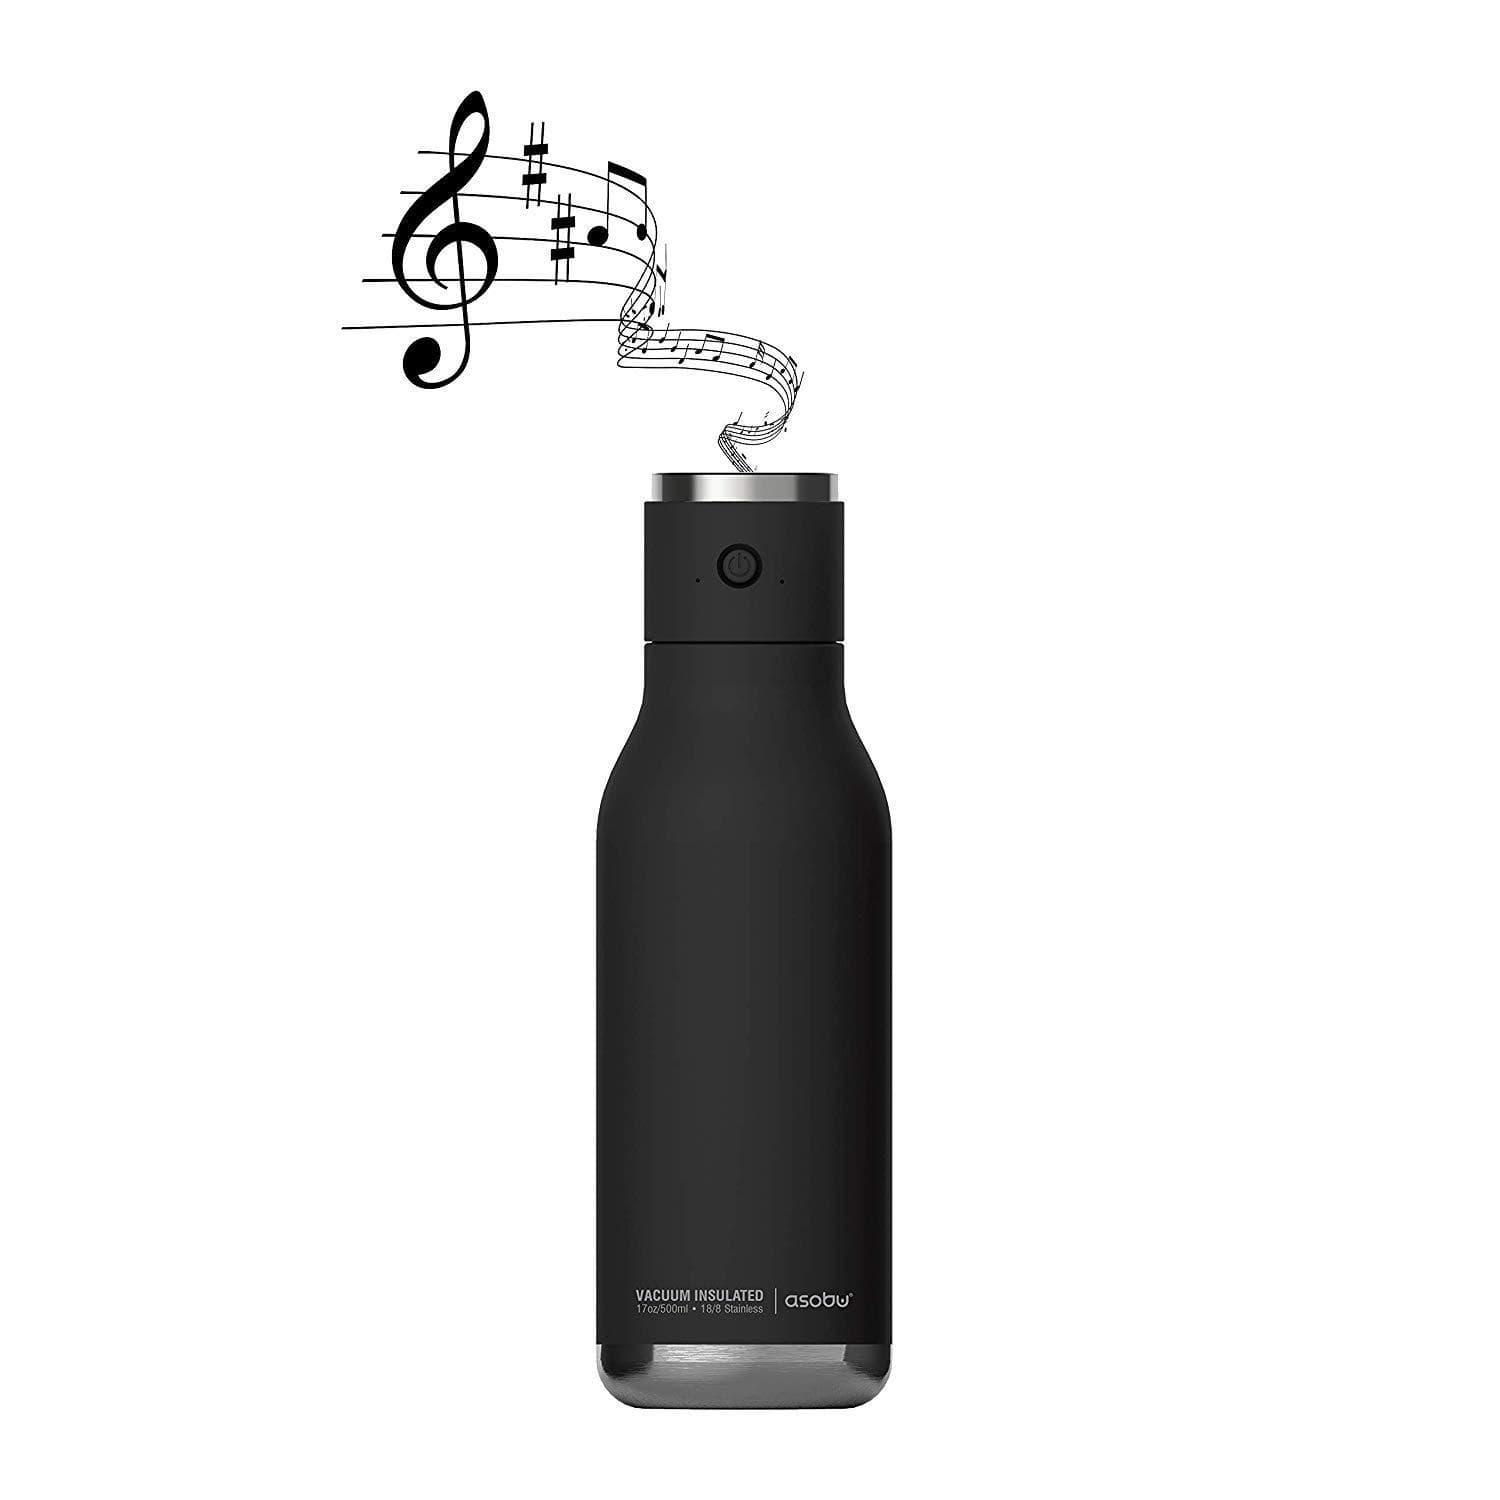 زجاجة ماء مع غطاء مكبر صوت Asobu - Wireless Stainless Steel Water Bottle with a Speaker Lid 17 Ounce - أسود